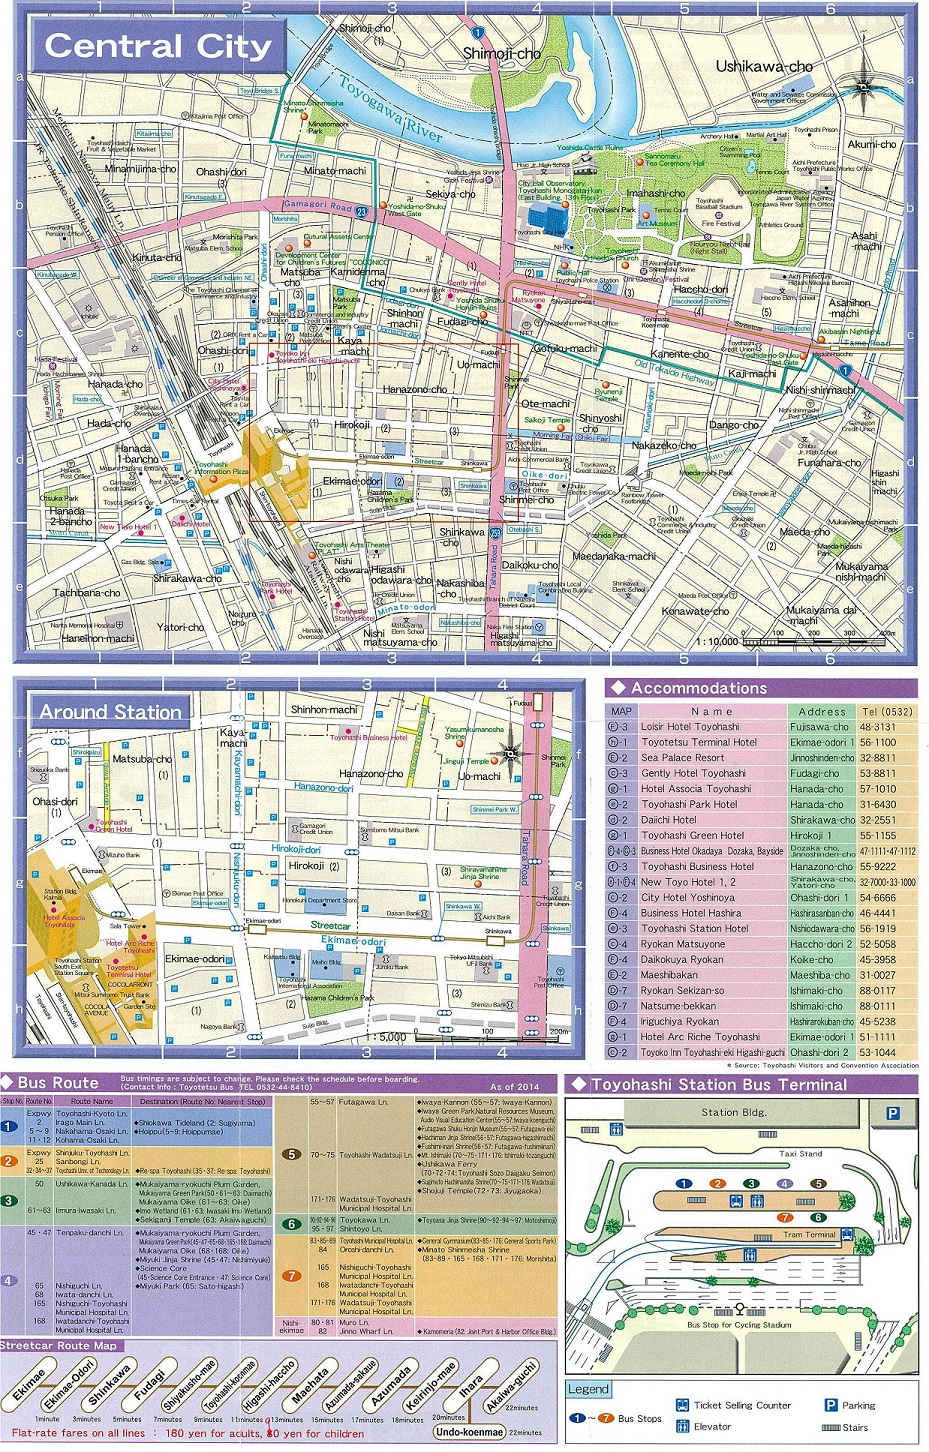 toyohashi city guide map 06